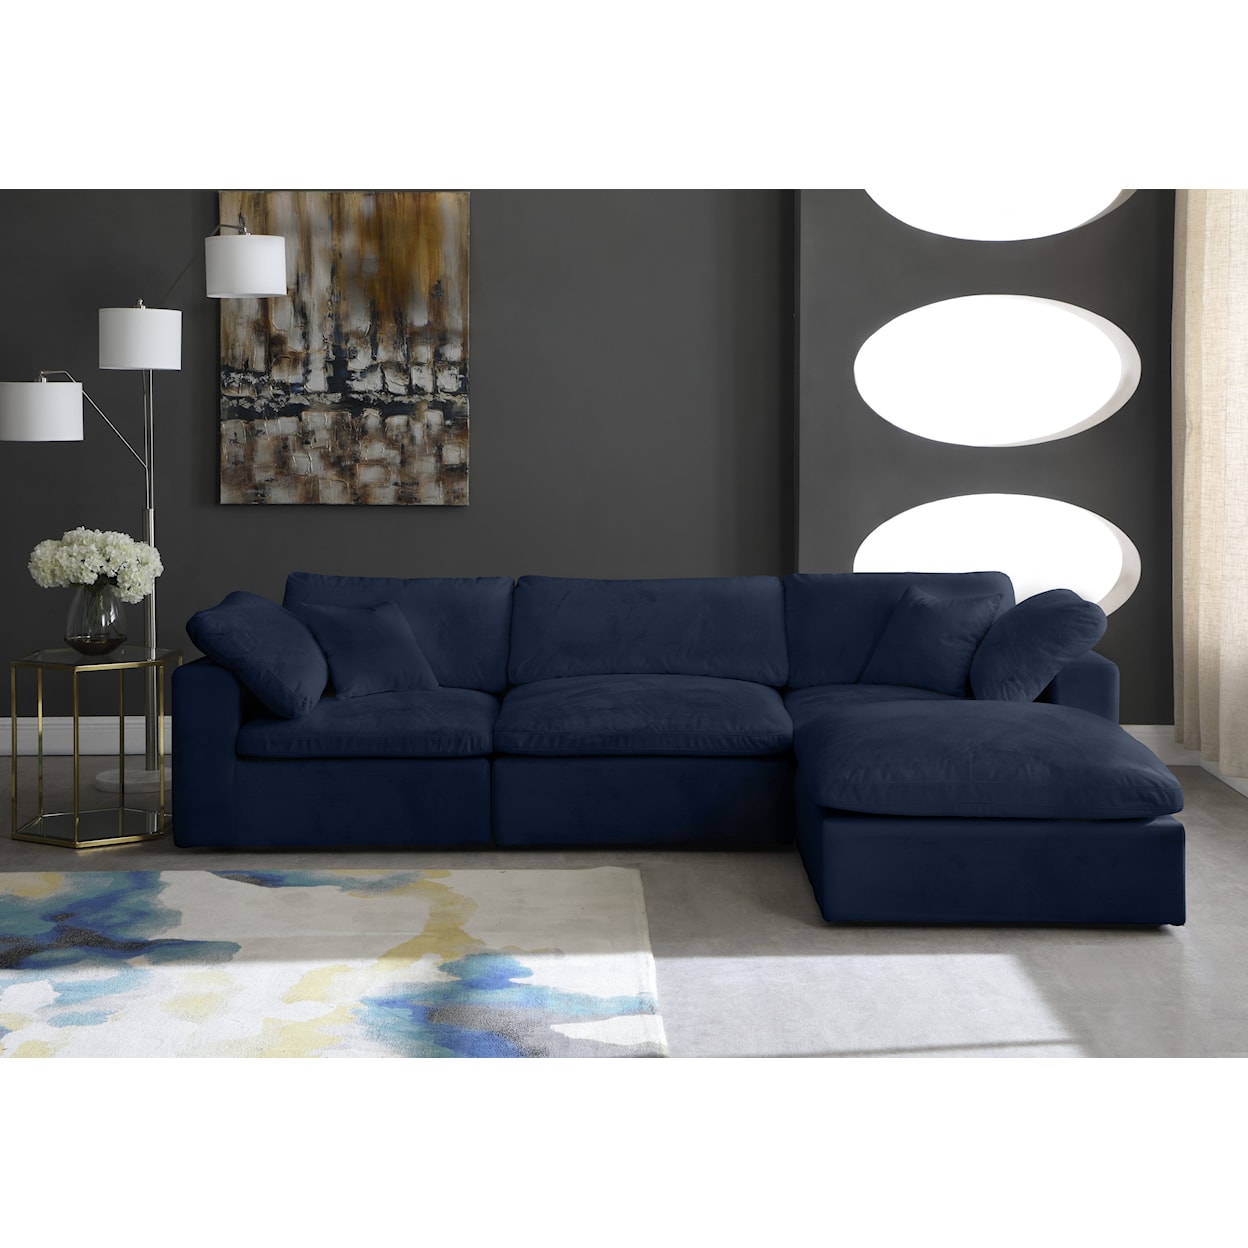 Meridian Furniture Cozy Comfort Modular Sectional